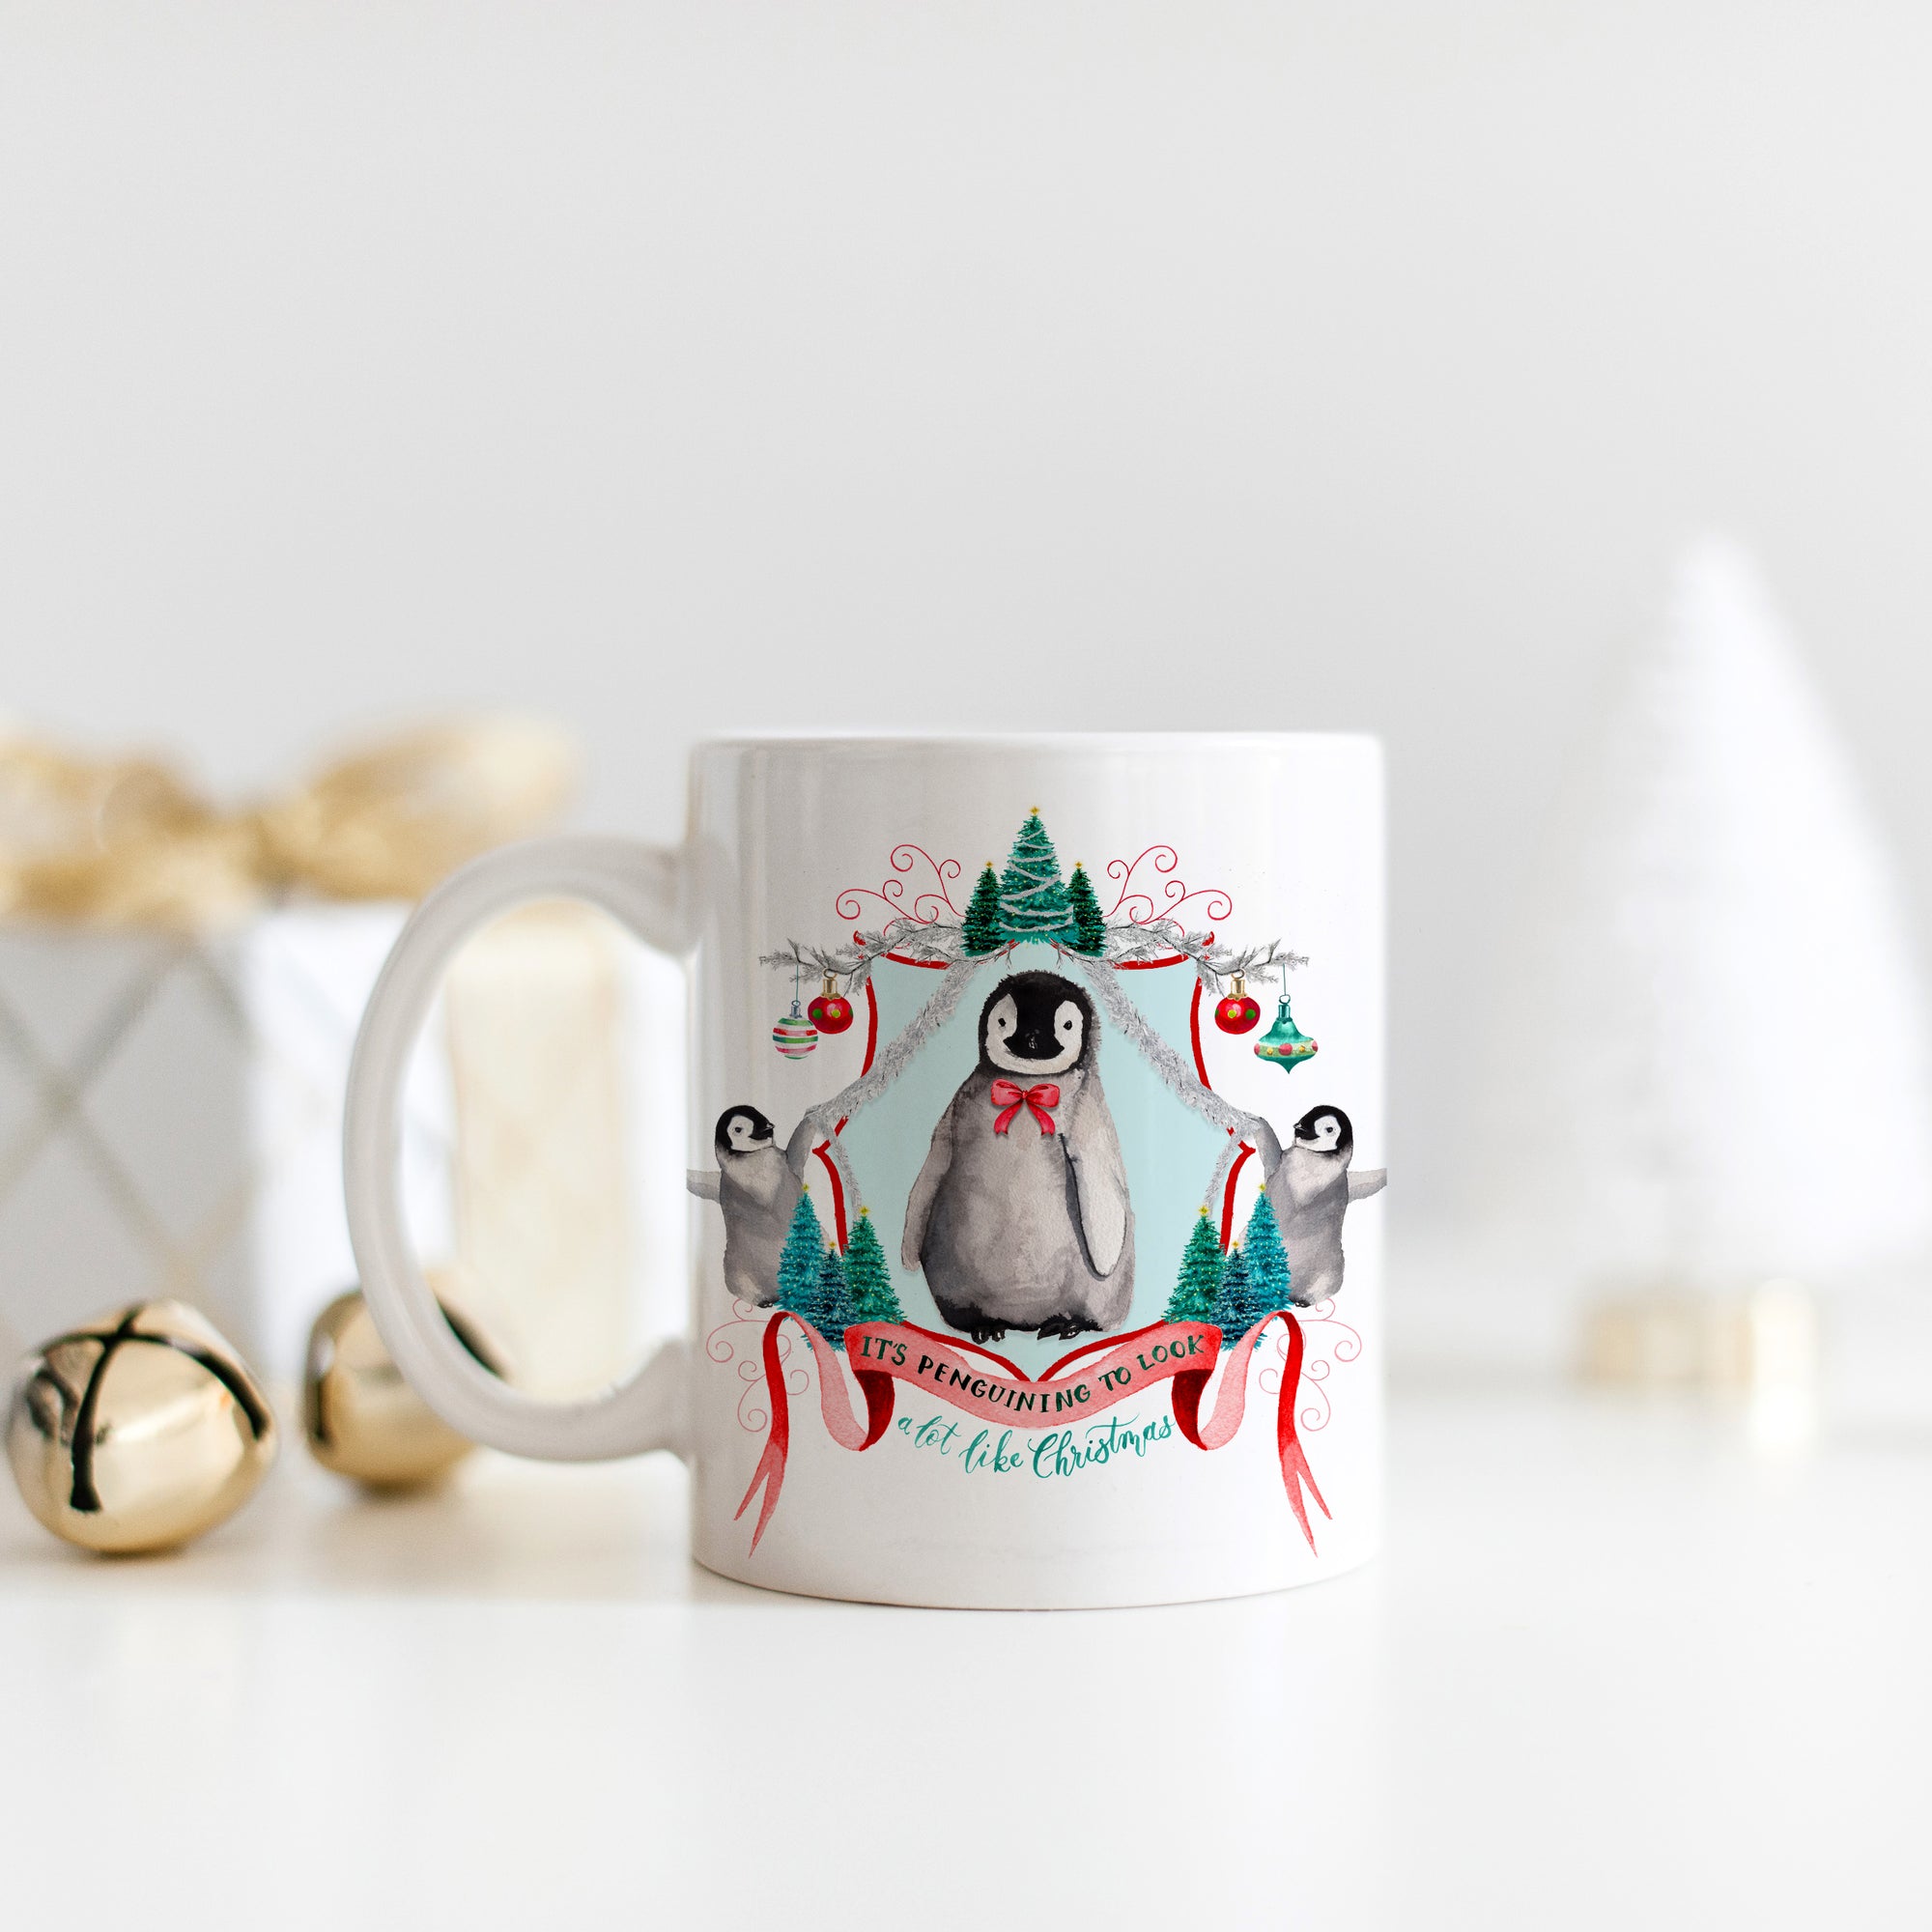 It's Penguining to Look a Lot Like Christmas Mug